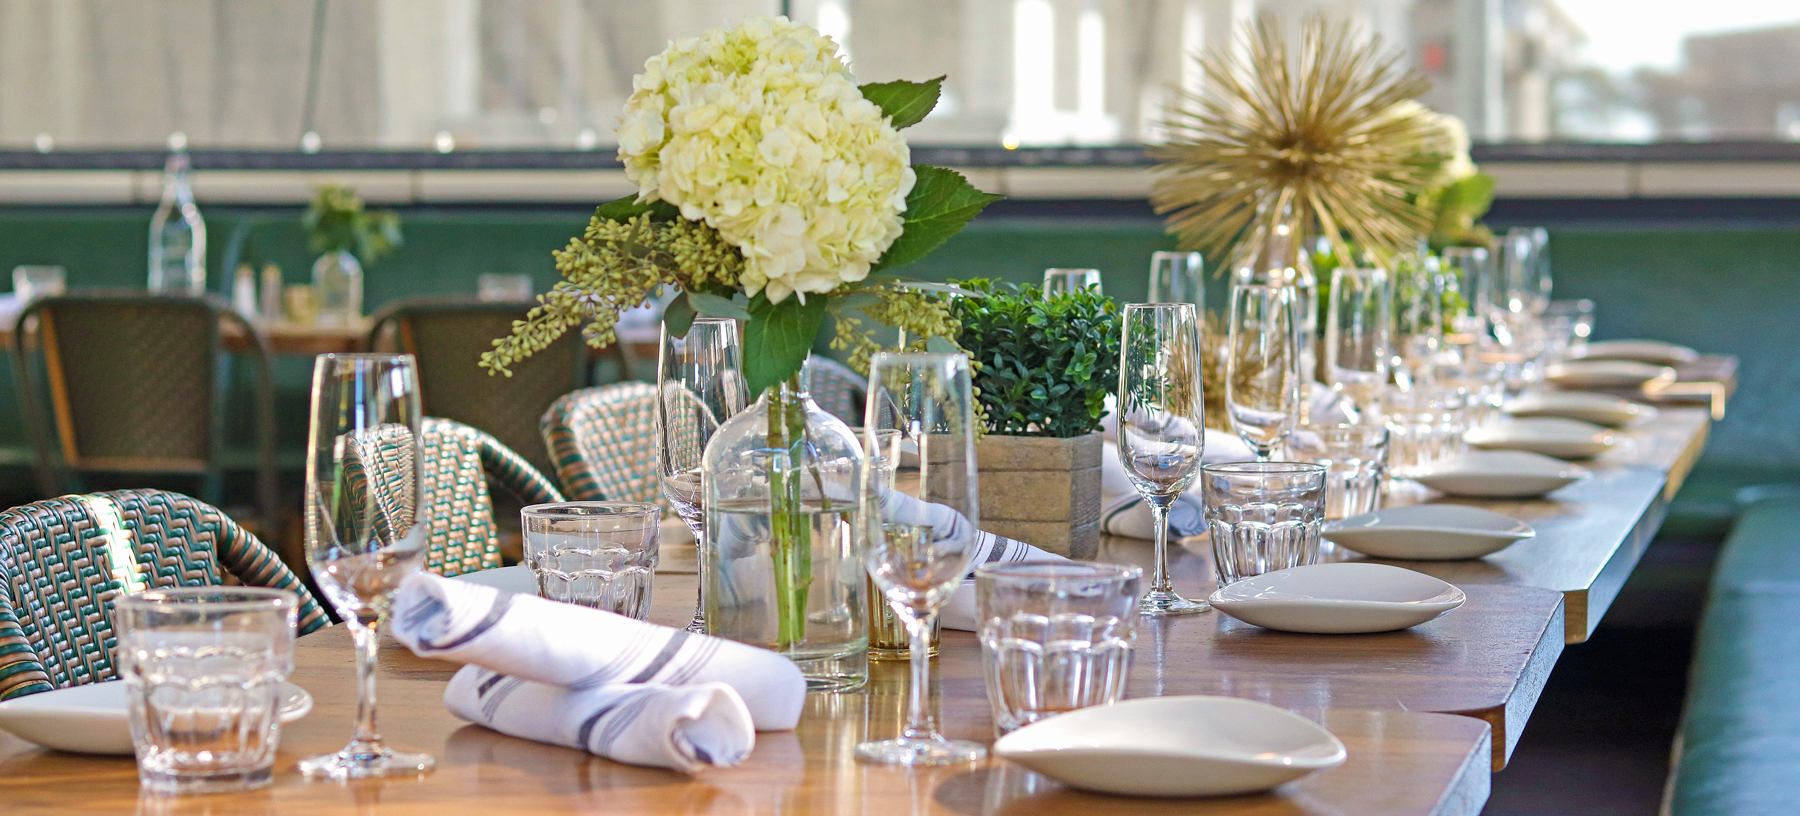 Table arrangement for wedding.